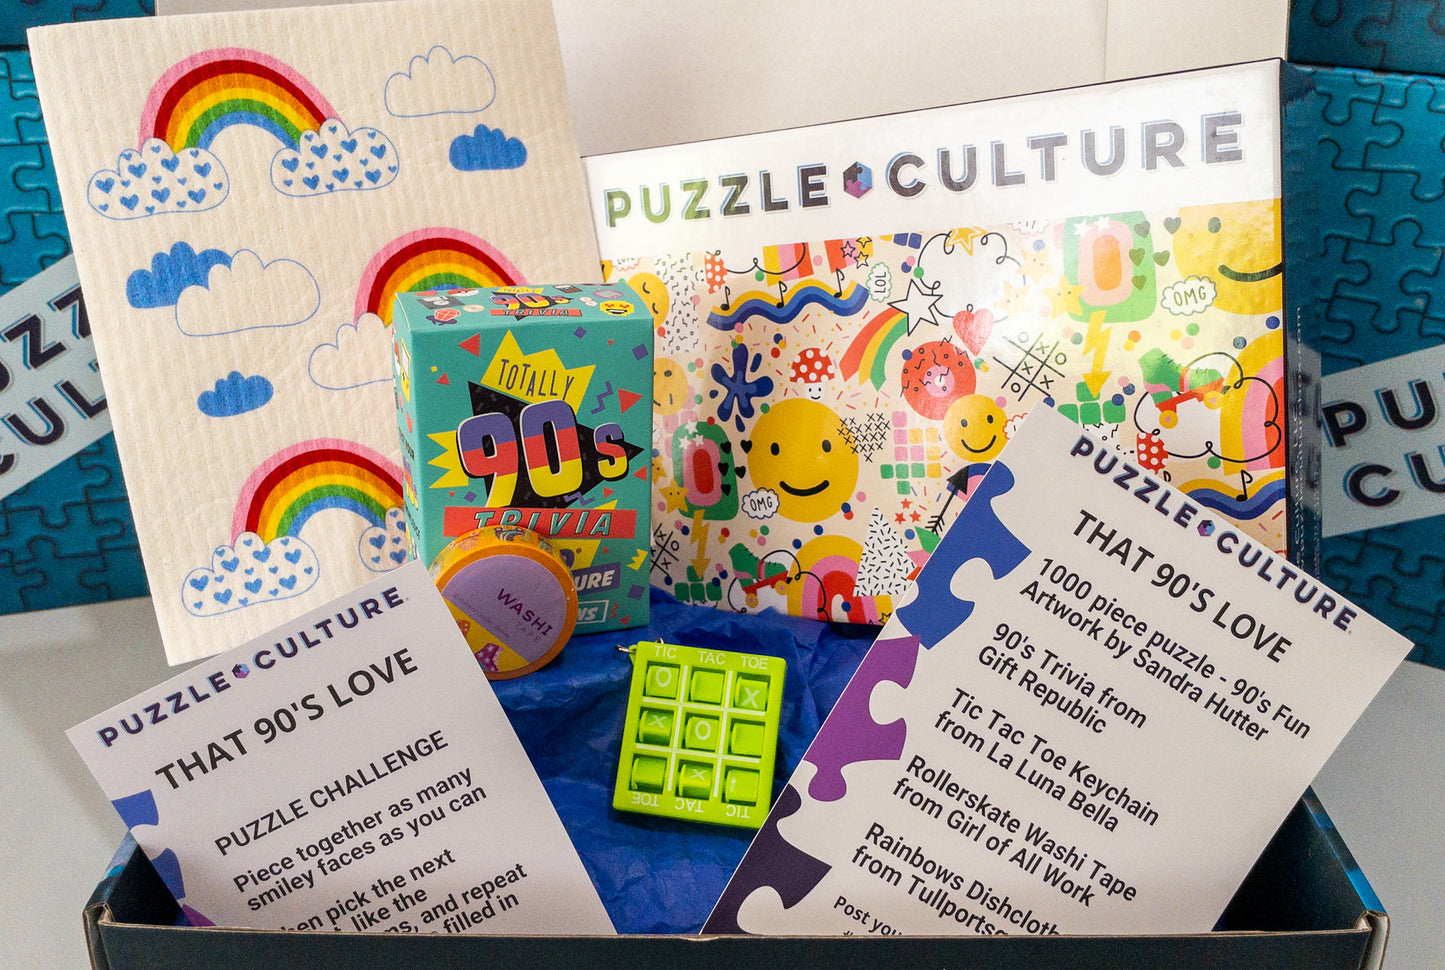 90's Love Puzzle Culture Subscription Past Box example